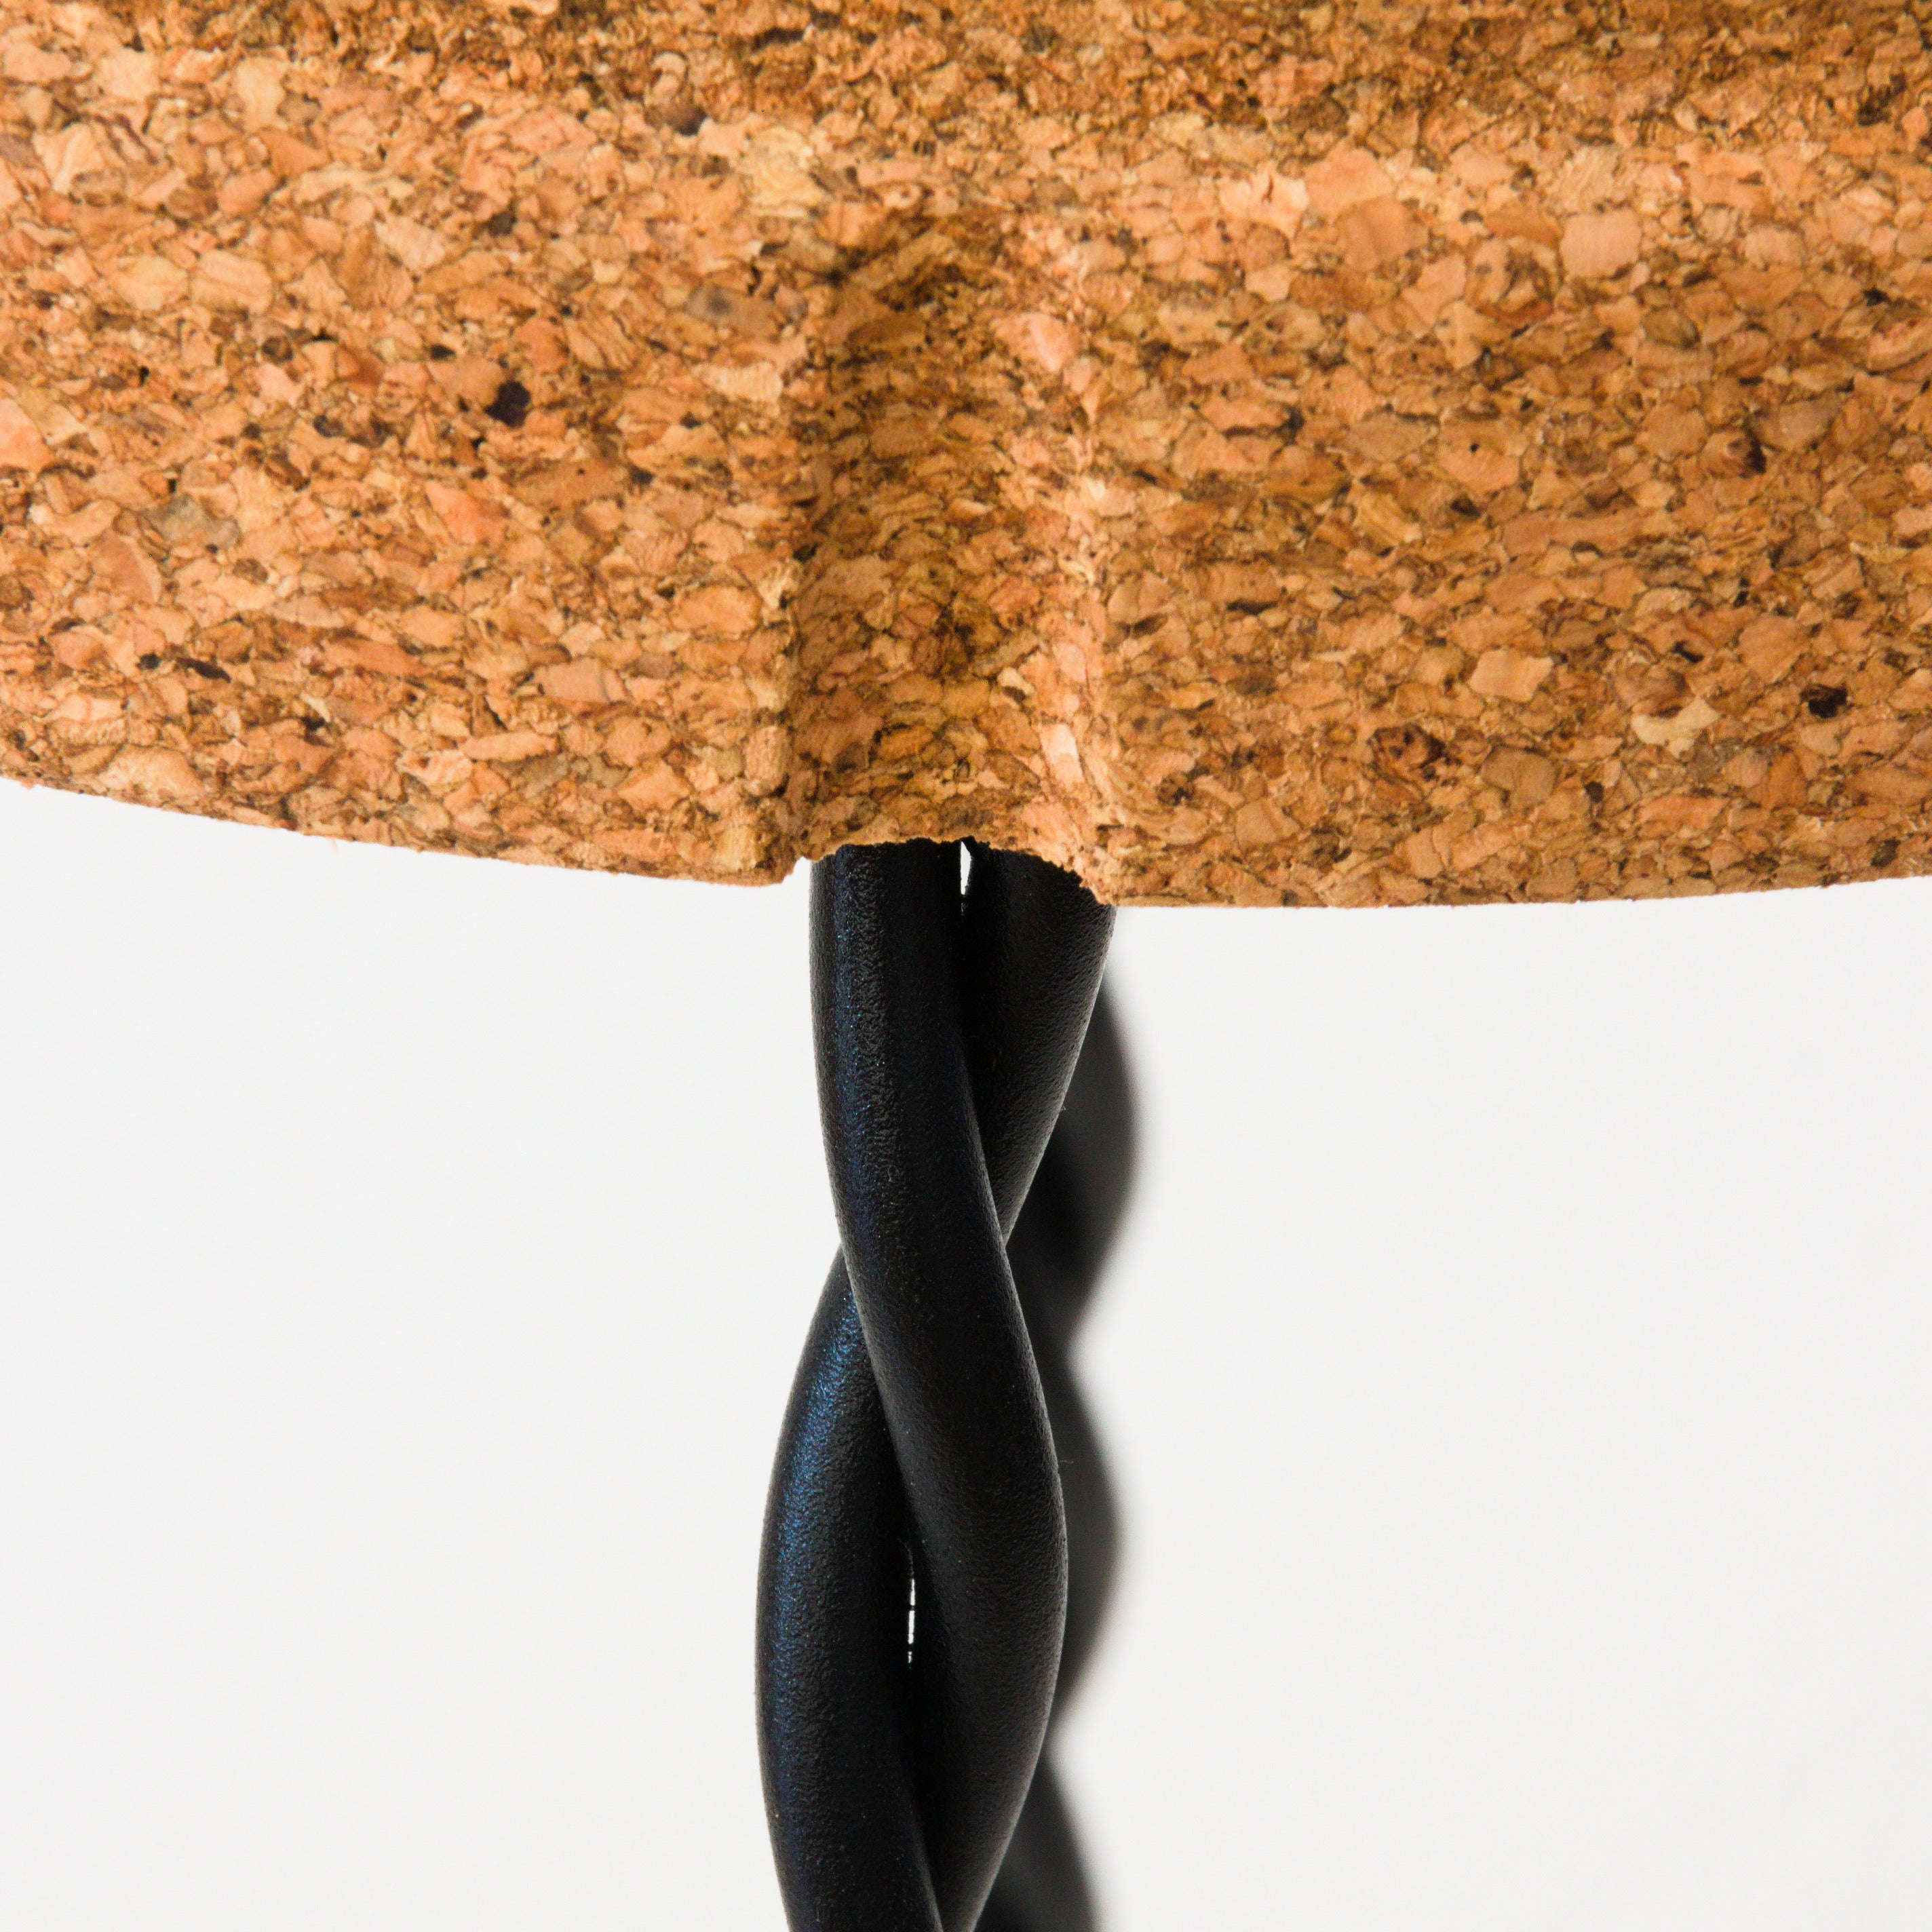 VERKORKst premium champagne bar stool made of cork and metal * Muselet design * Vintage side table * vegan * Made in Portugal